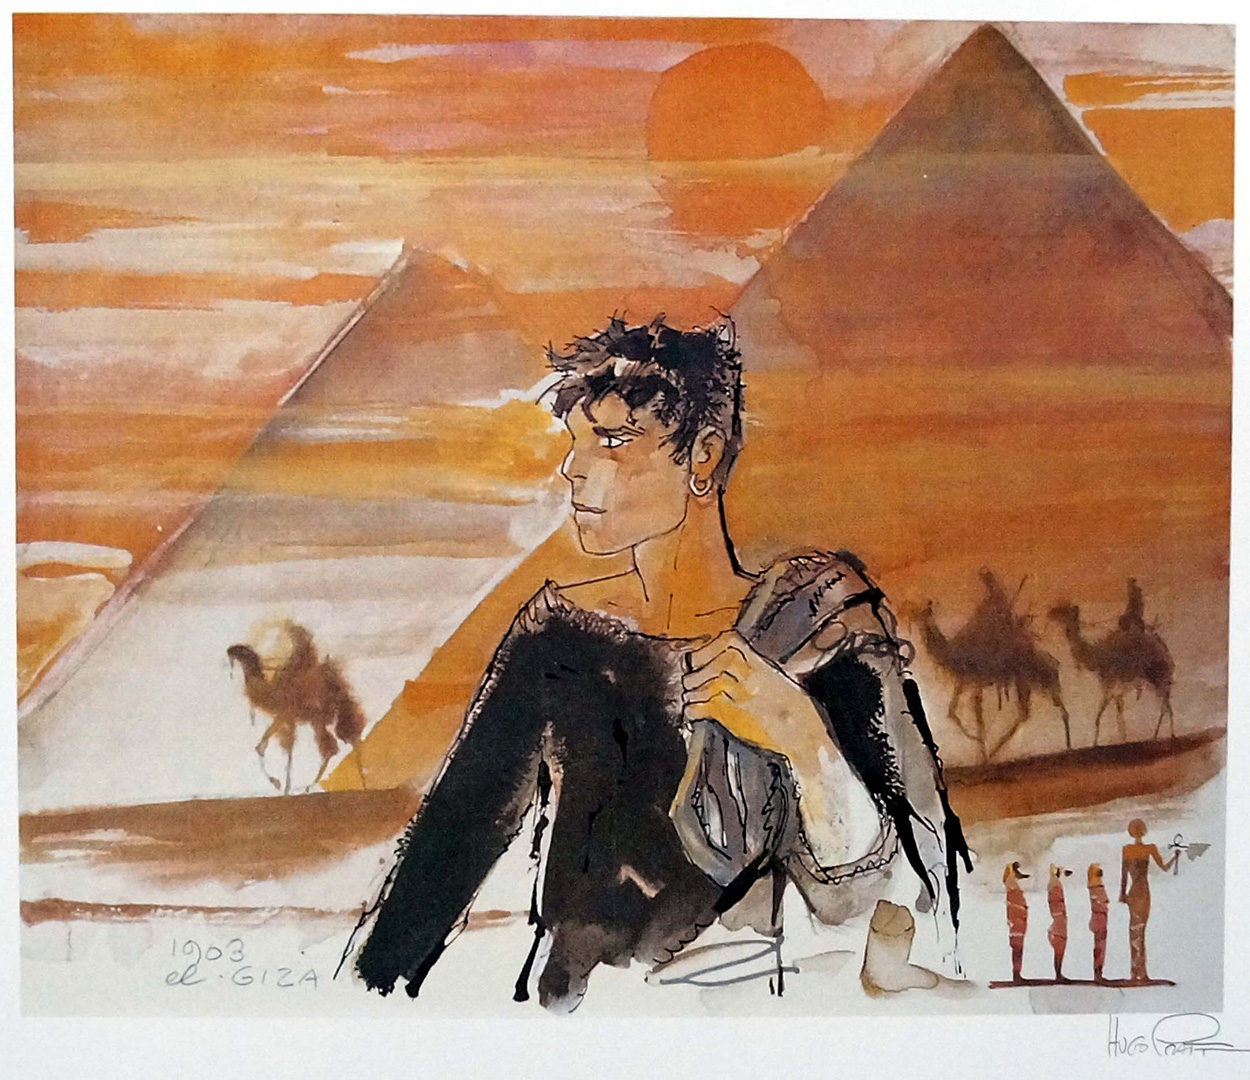 Corto Maltese - Hello Giza! (Print) (Signed) art by Hugo Pratt Art at The Illustration Art Gallery